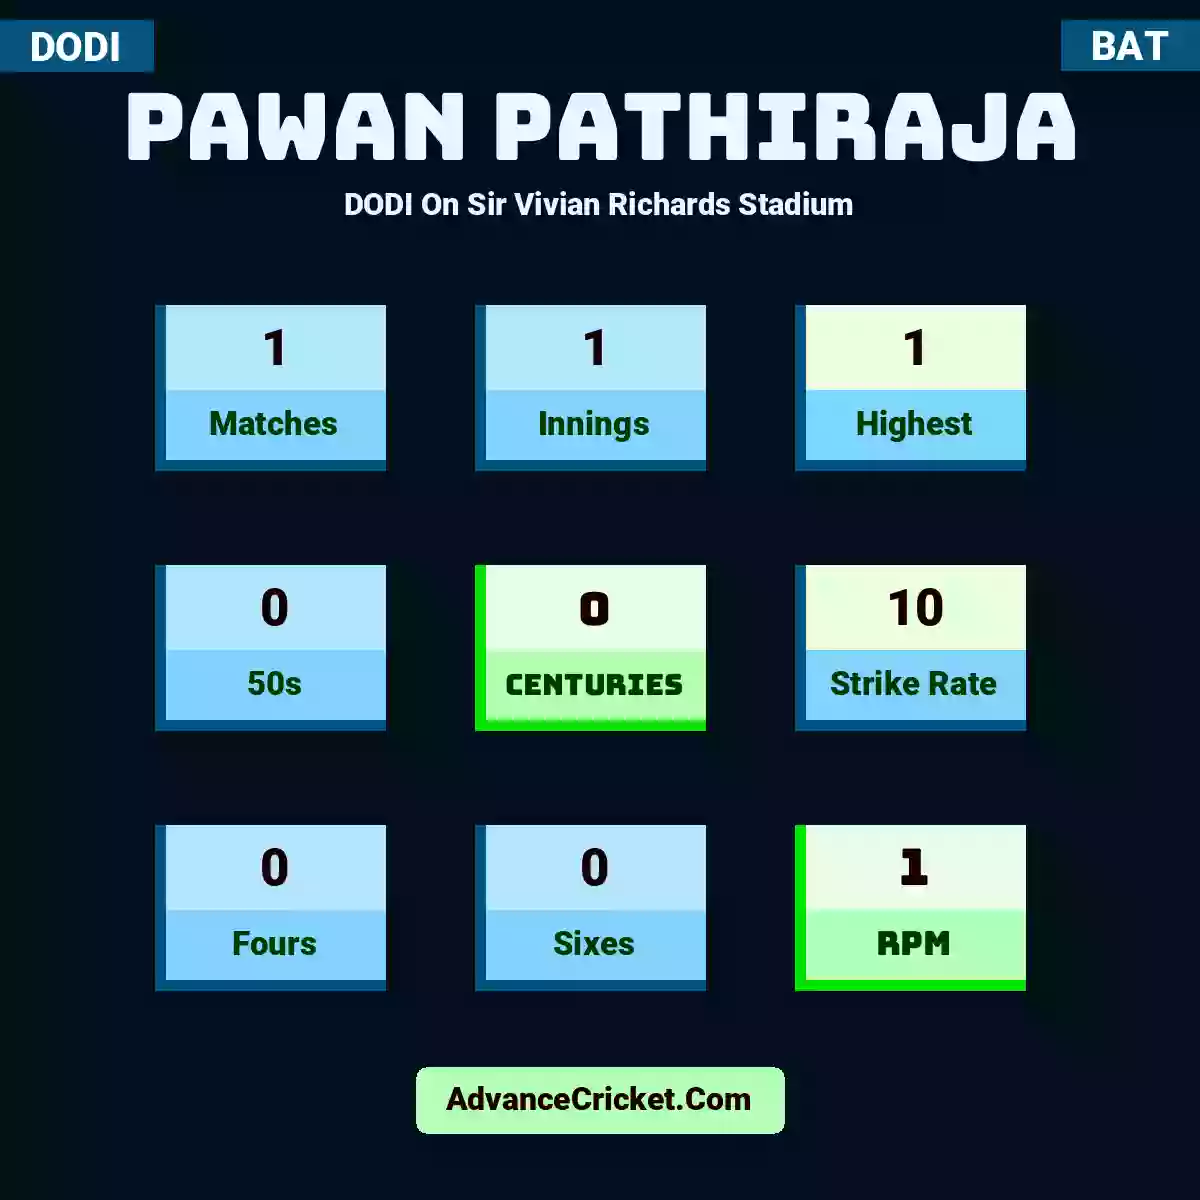 Pawan Pathiraja DODI  On Sir Vivian Richards Stadium, Pawan Pathiraja played 1 matches, scored 1 runs as highest, 0 half-centuries, and 0 centuries, with a strike rate of 10. P.Pathiraja hit 0 fours and 0 sixes, with an RPM of 1.